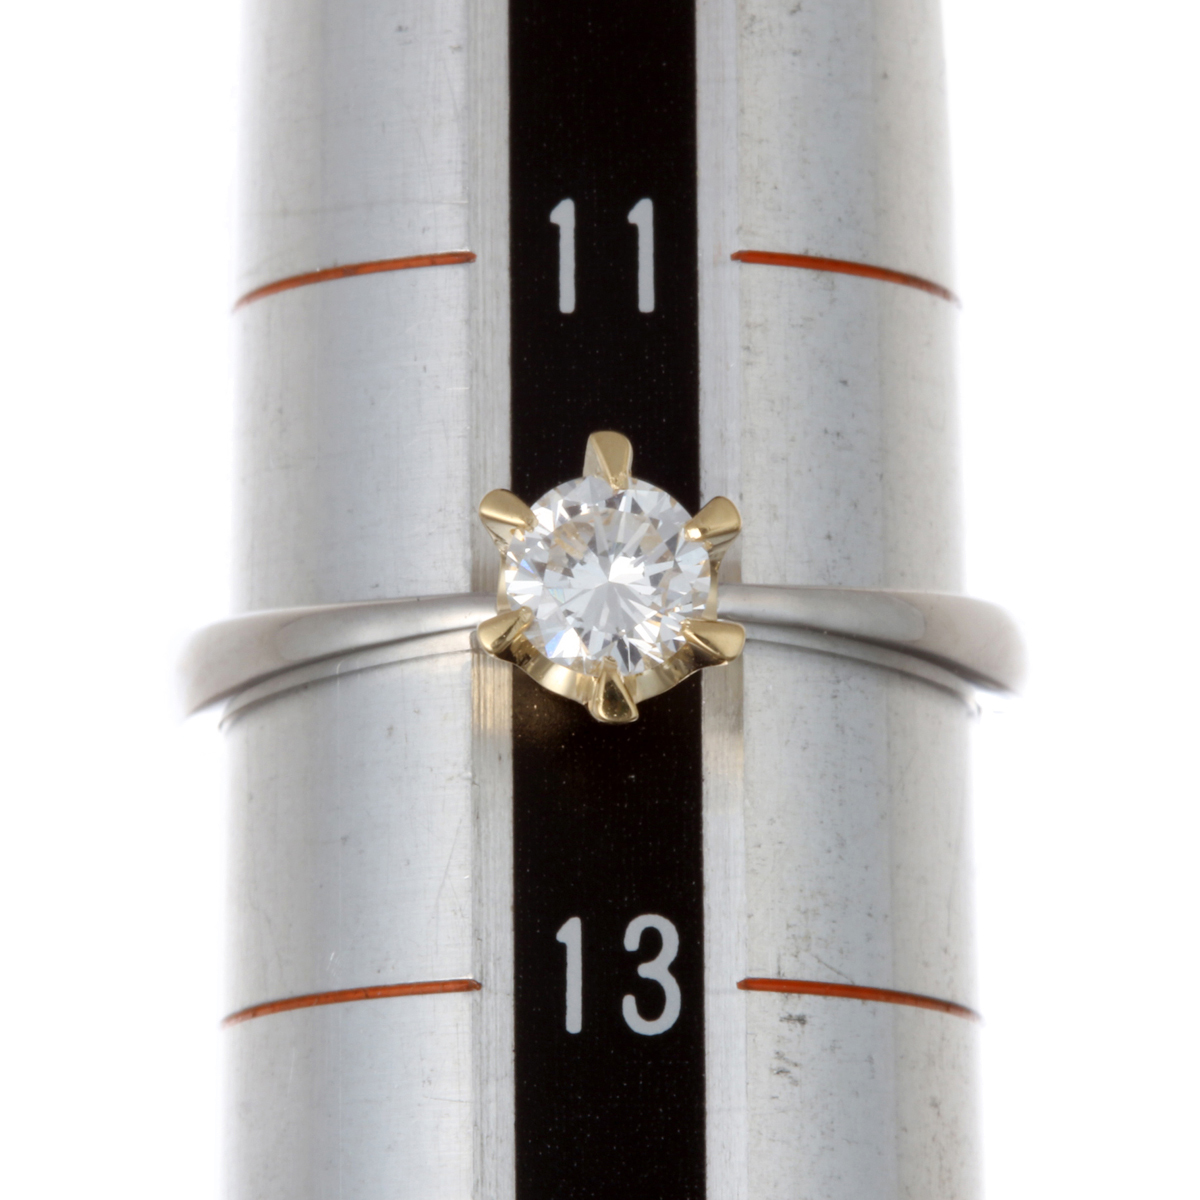 ［  серебро ... магазин  ］Non Brand ... брэнд  Pt850 K18  алмаз   кольцо   *   кольцо   Pt850 платиновый  12 номер    женский  DH52333